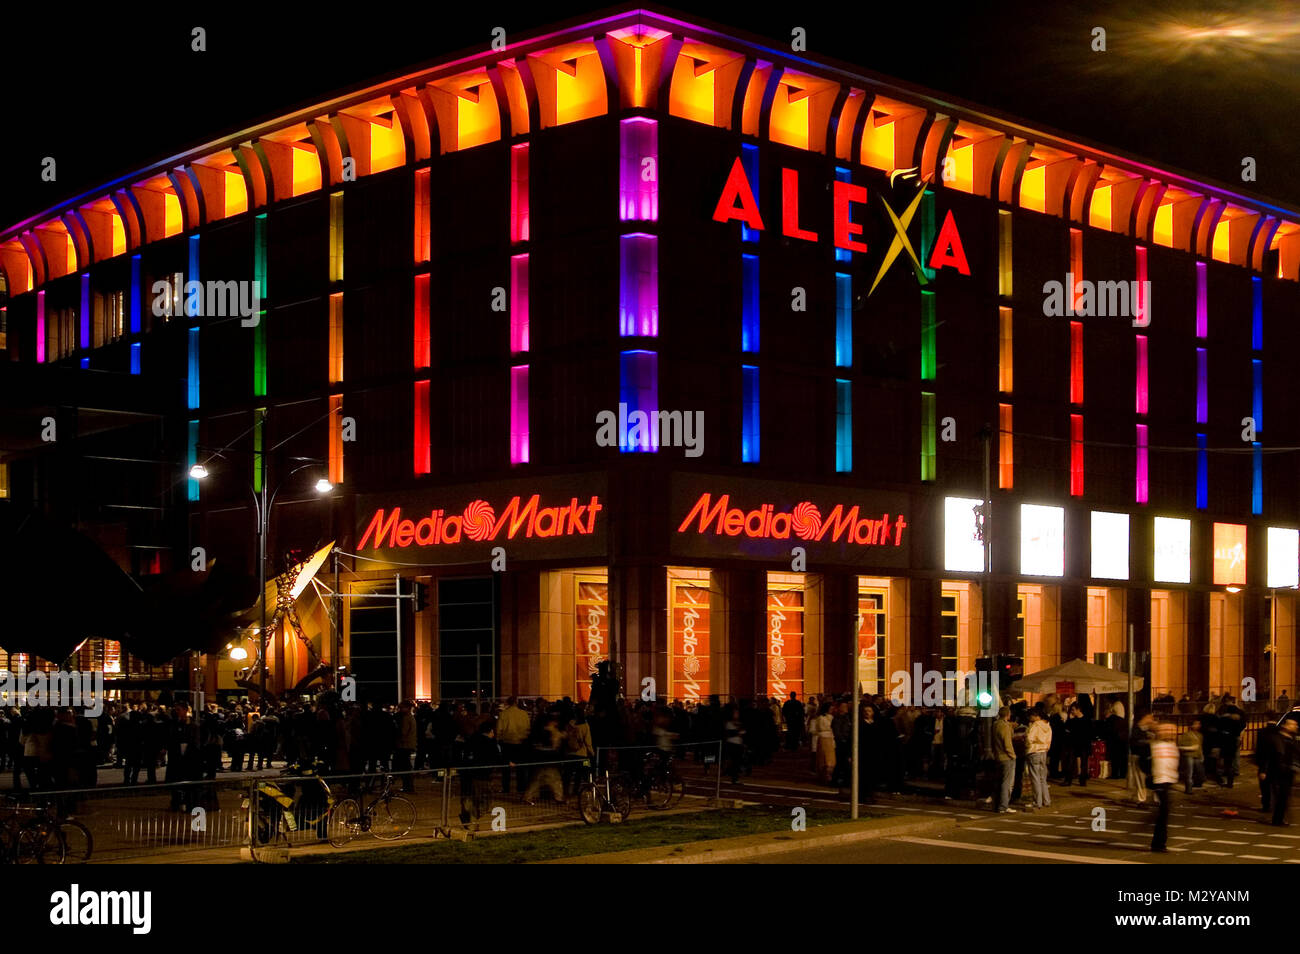 Mediamarkt im Alexa Stock Photo - Alamy